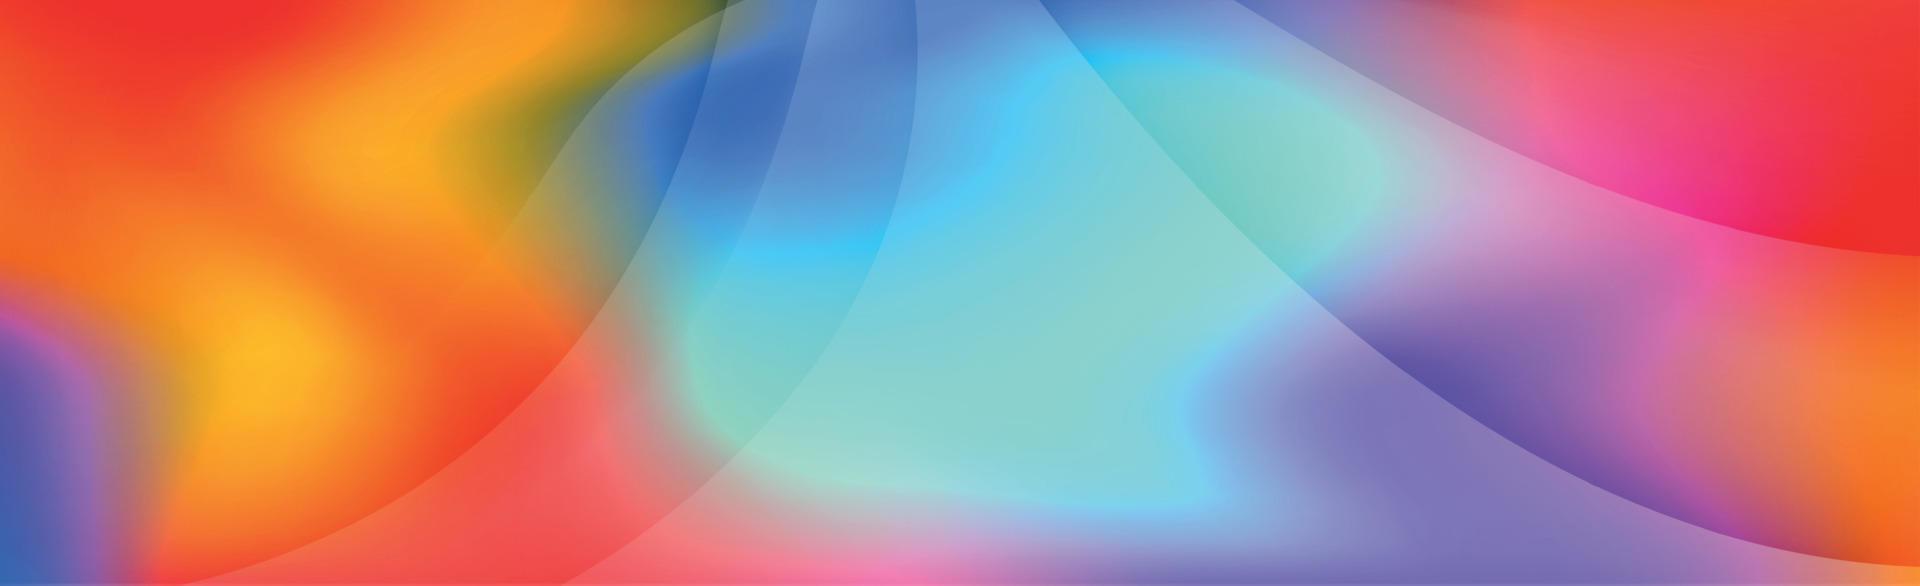 Fondo web abstracto panorámico degradado colorido - vector